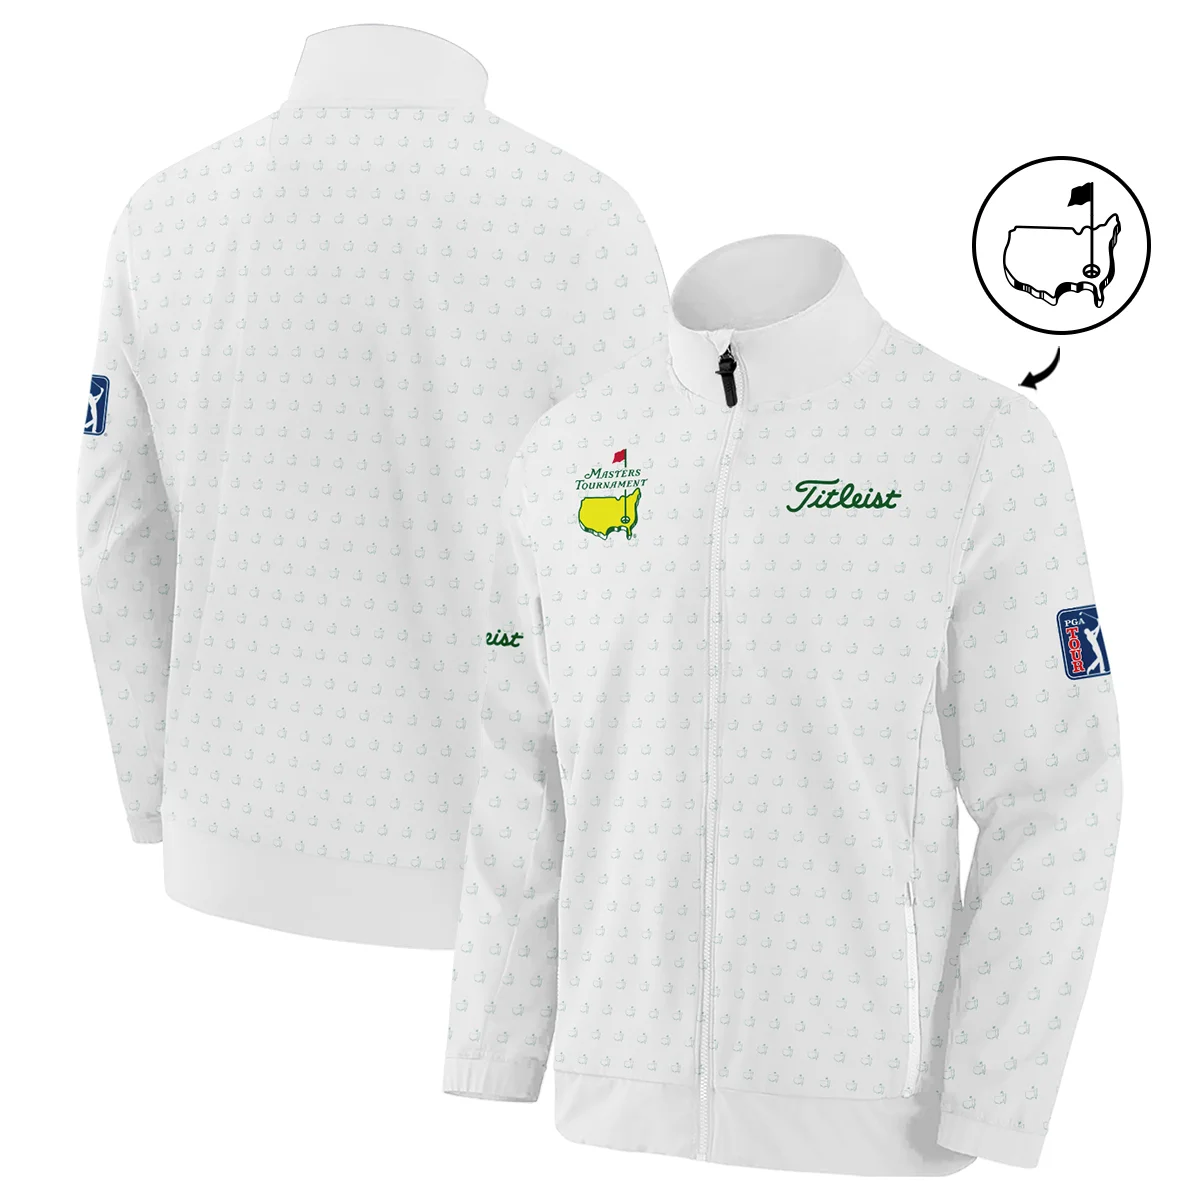 Golf Sport Masters Tournament Titleist Sleeveless Jacket Sports Logo Pattern White Green Sleeveless Jacket